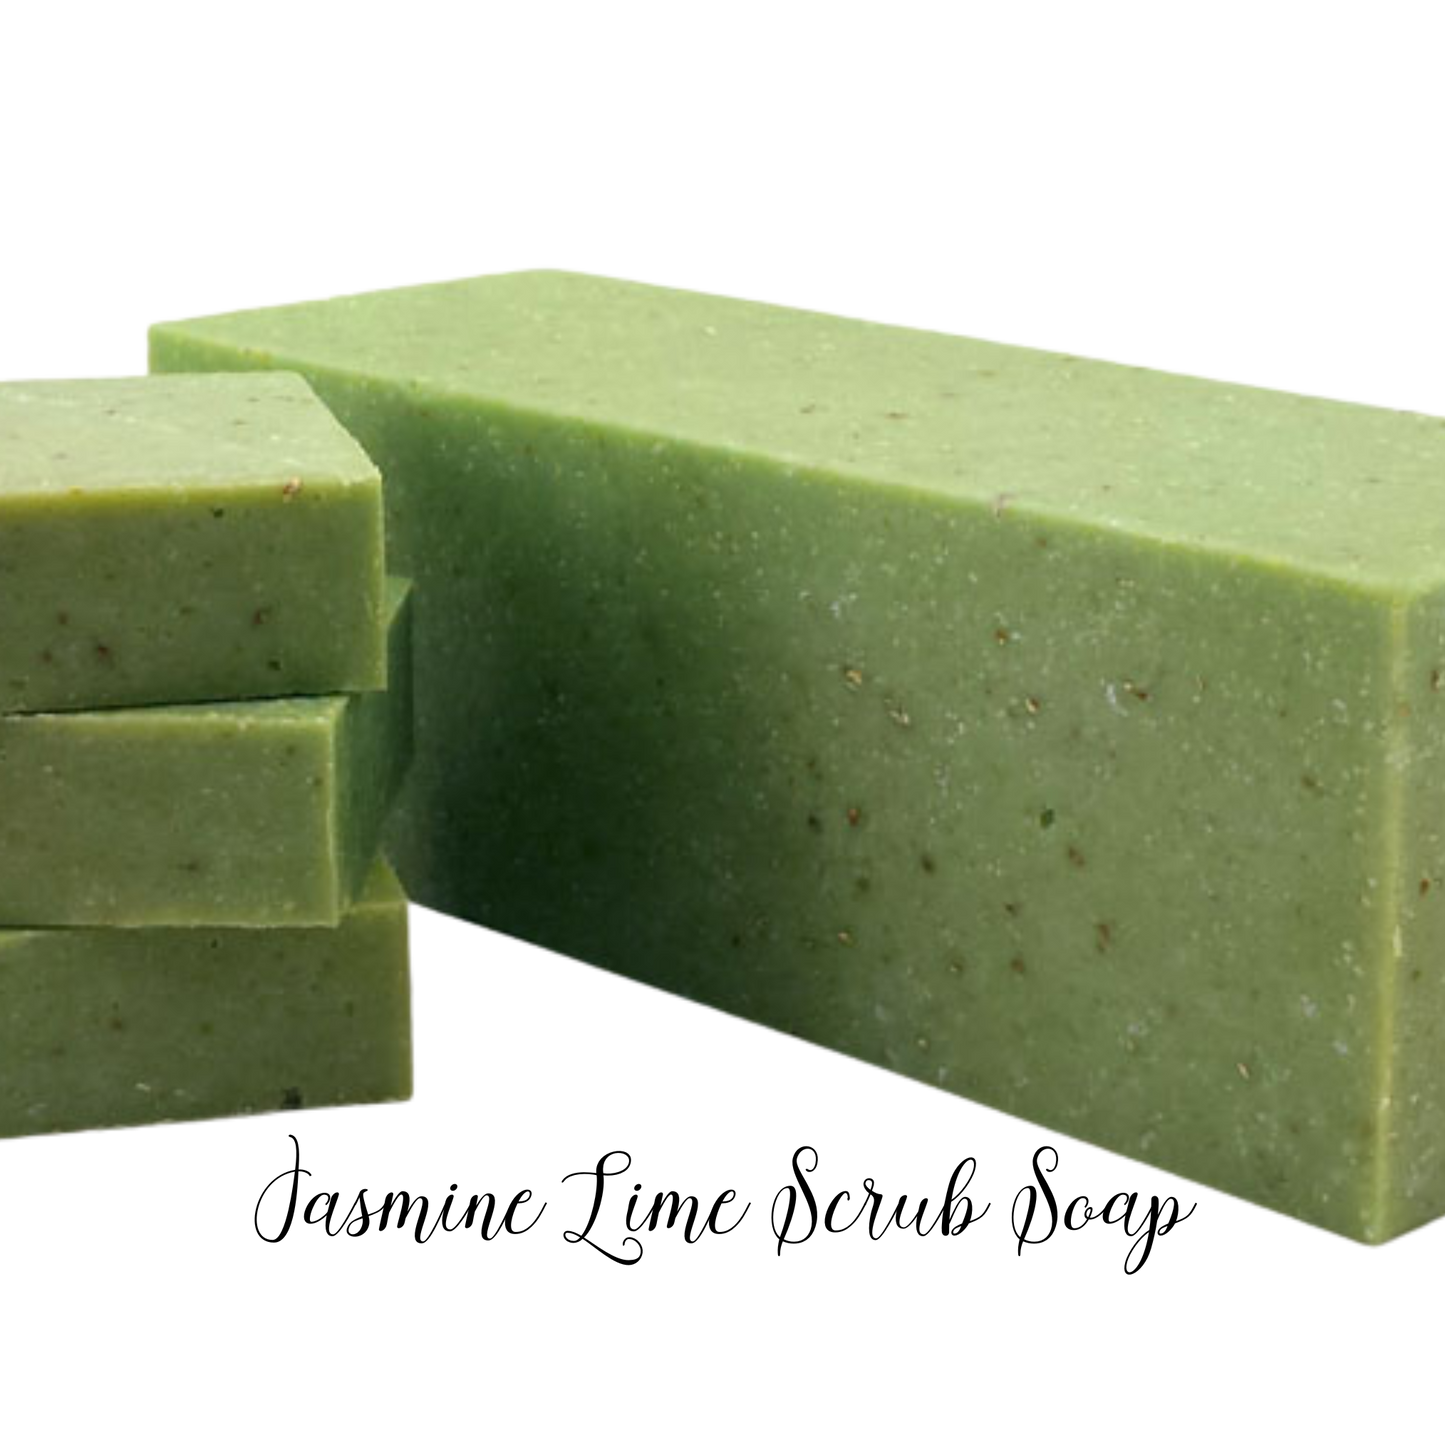 Jasmine Lime Scrub Soap